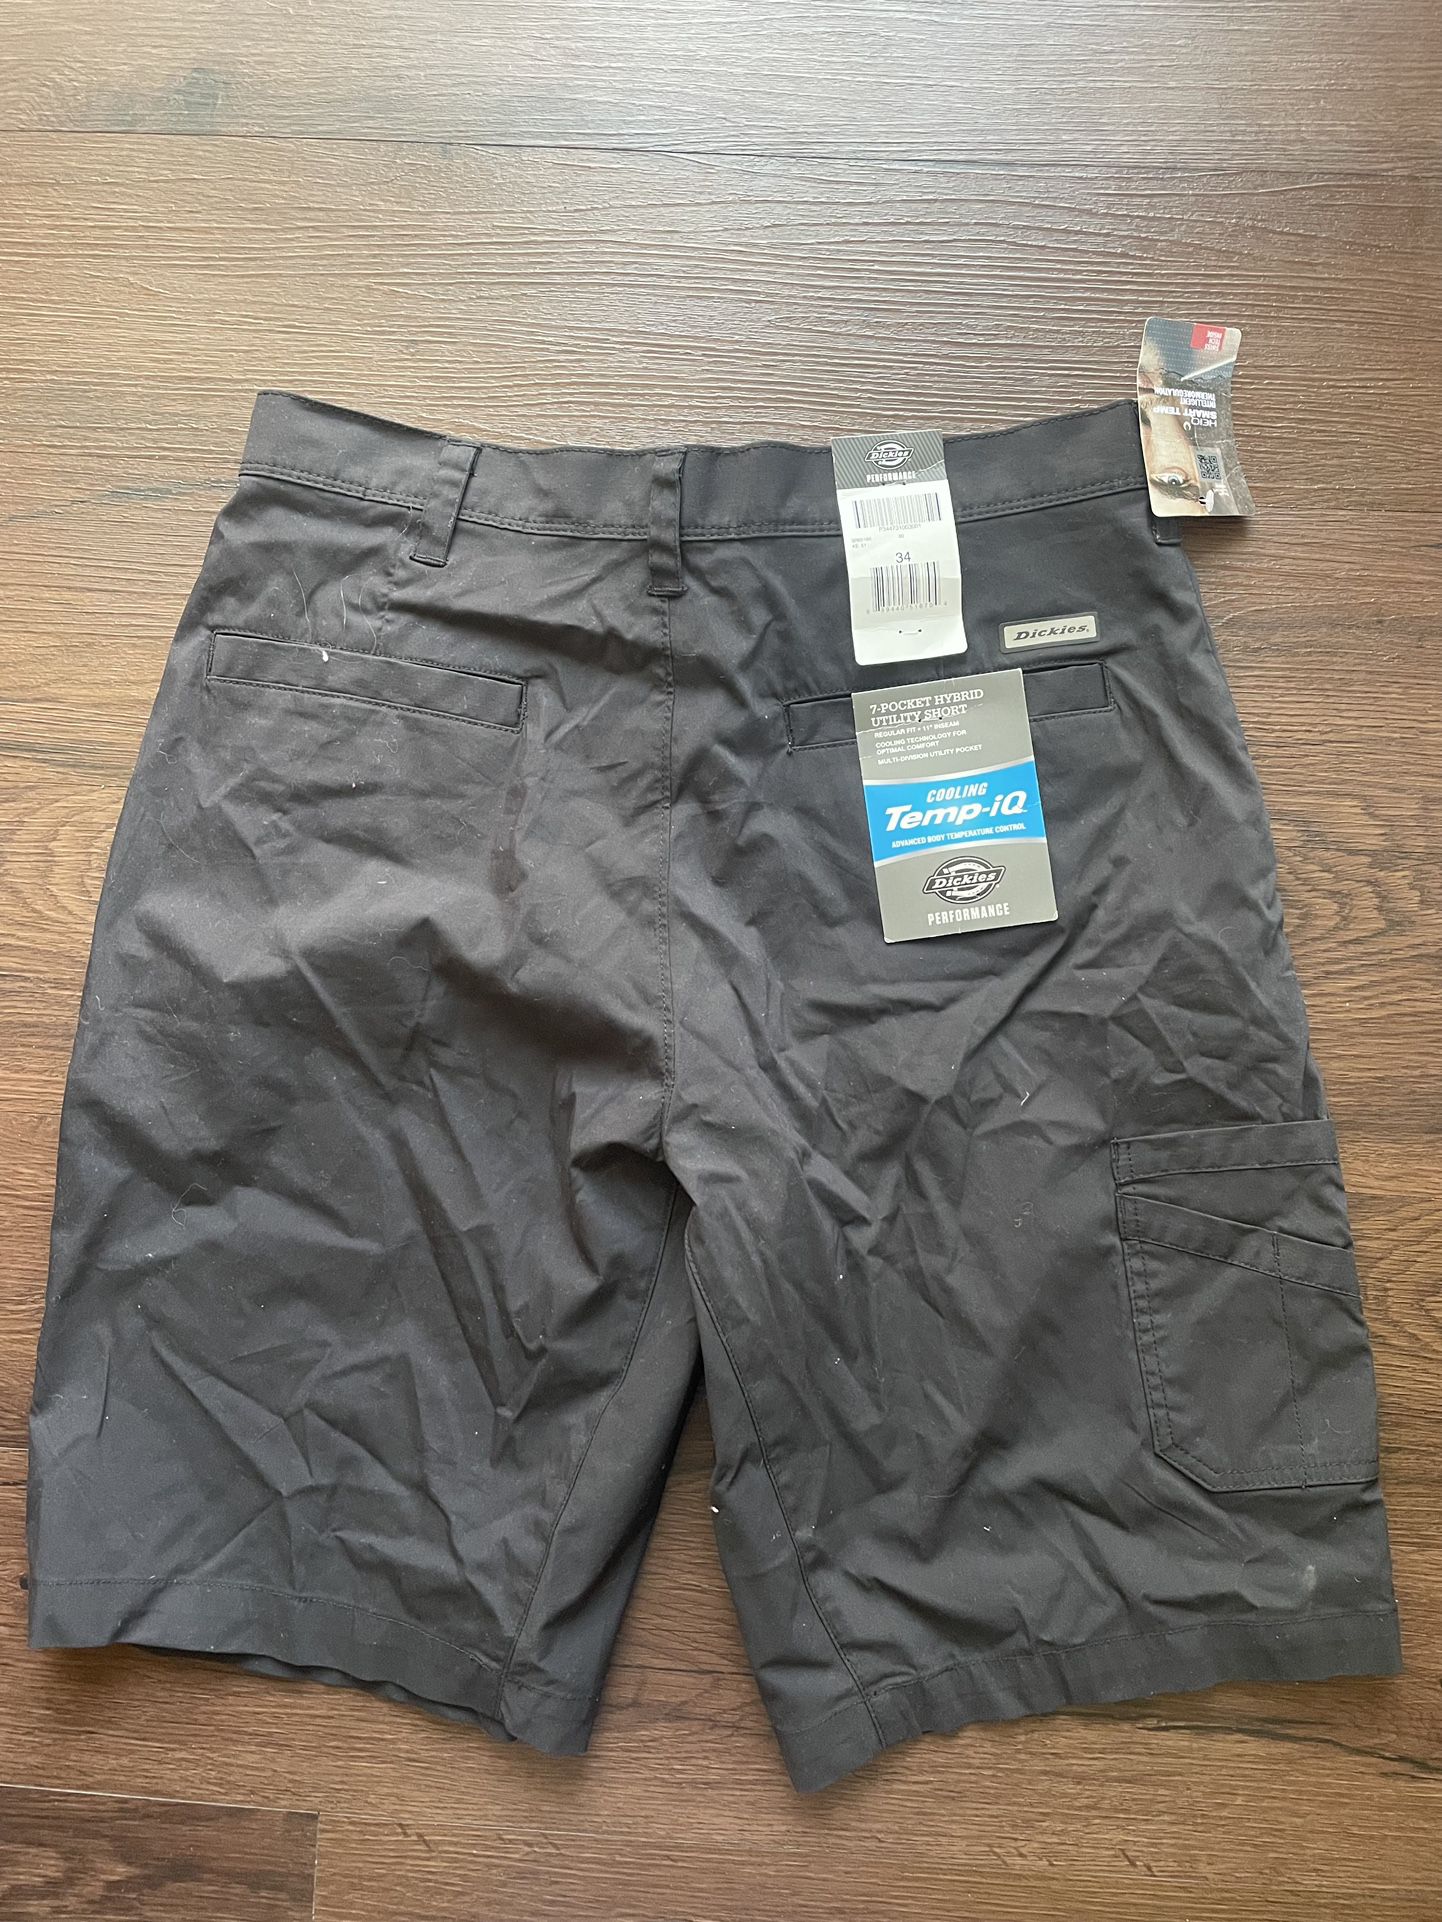 New Man’s FLEX Cooling Regular Fit Utility Shorts, Size 34